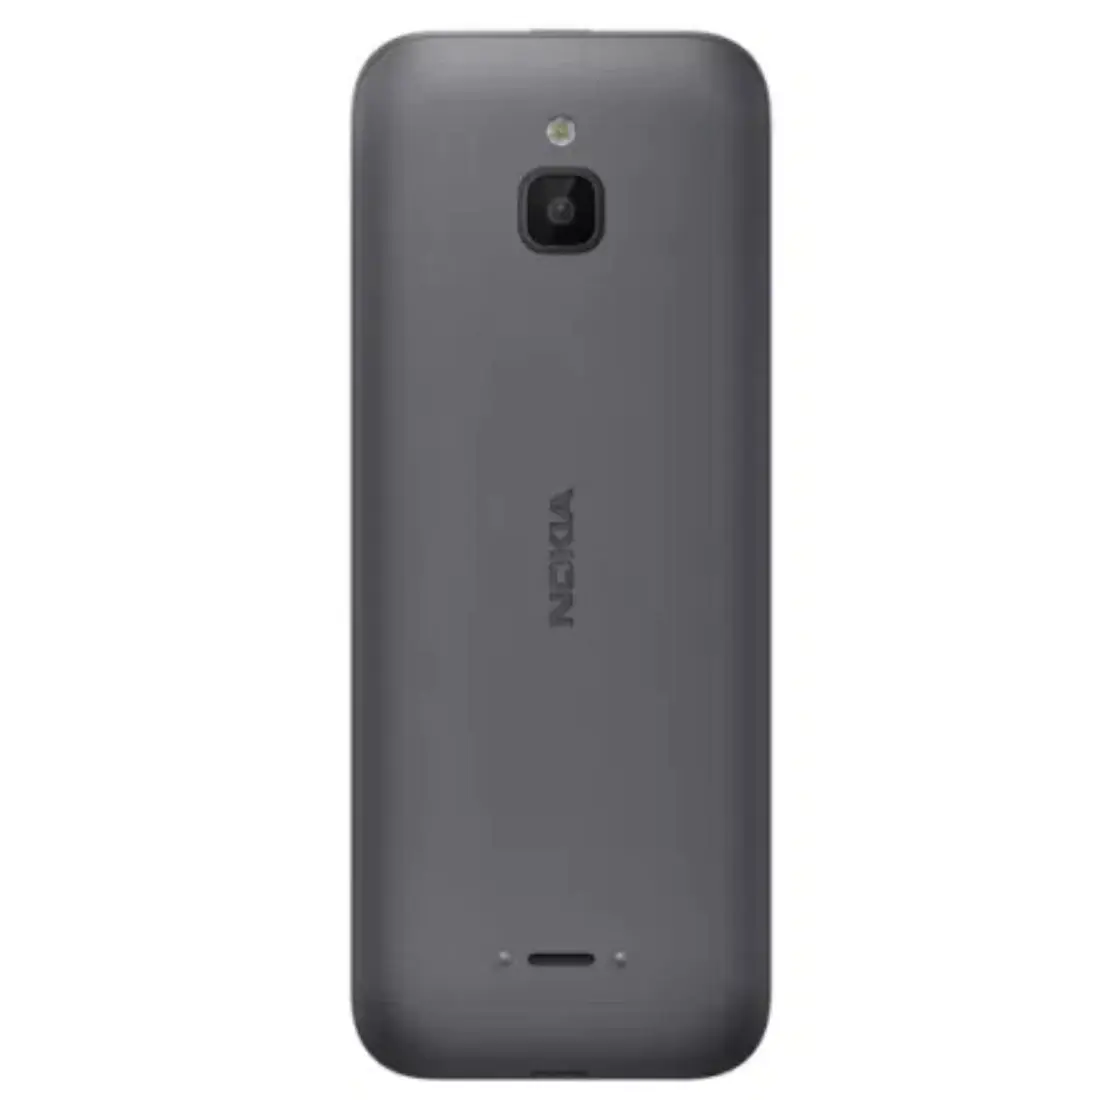 Telefon mobil Nokia 6300, Dual SIM, 4GB, 4G, Negru